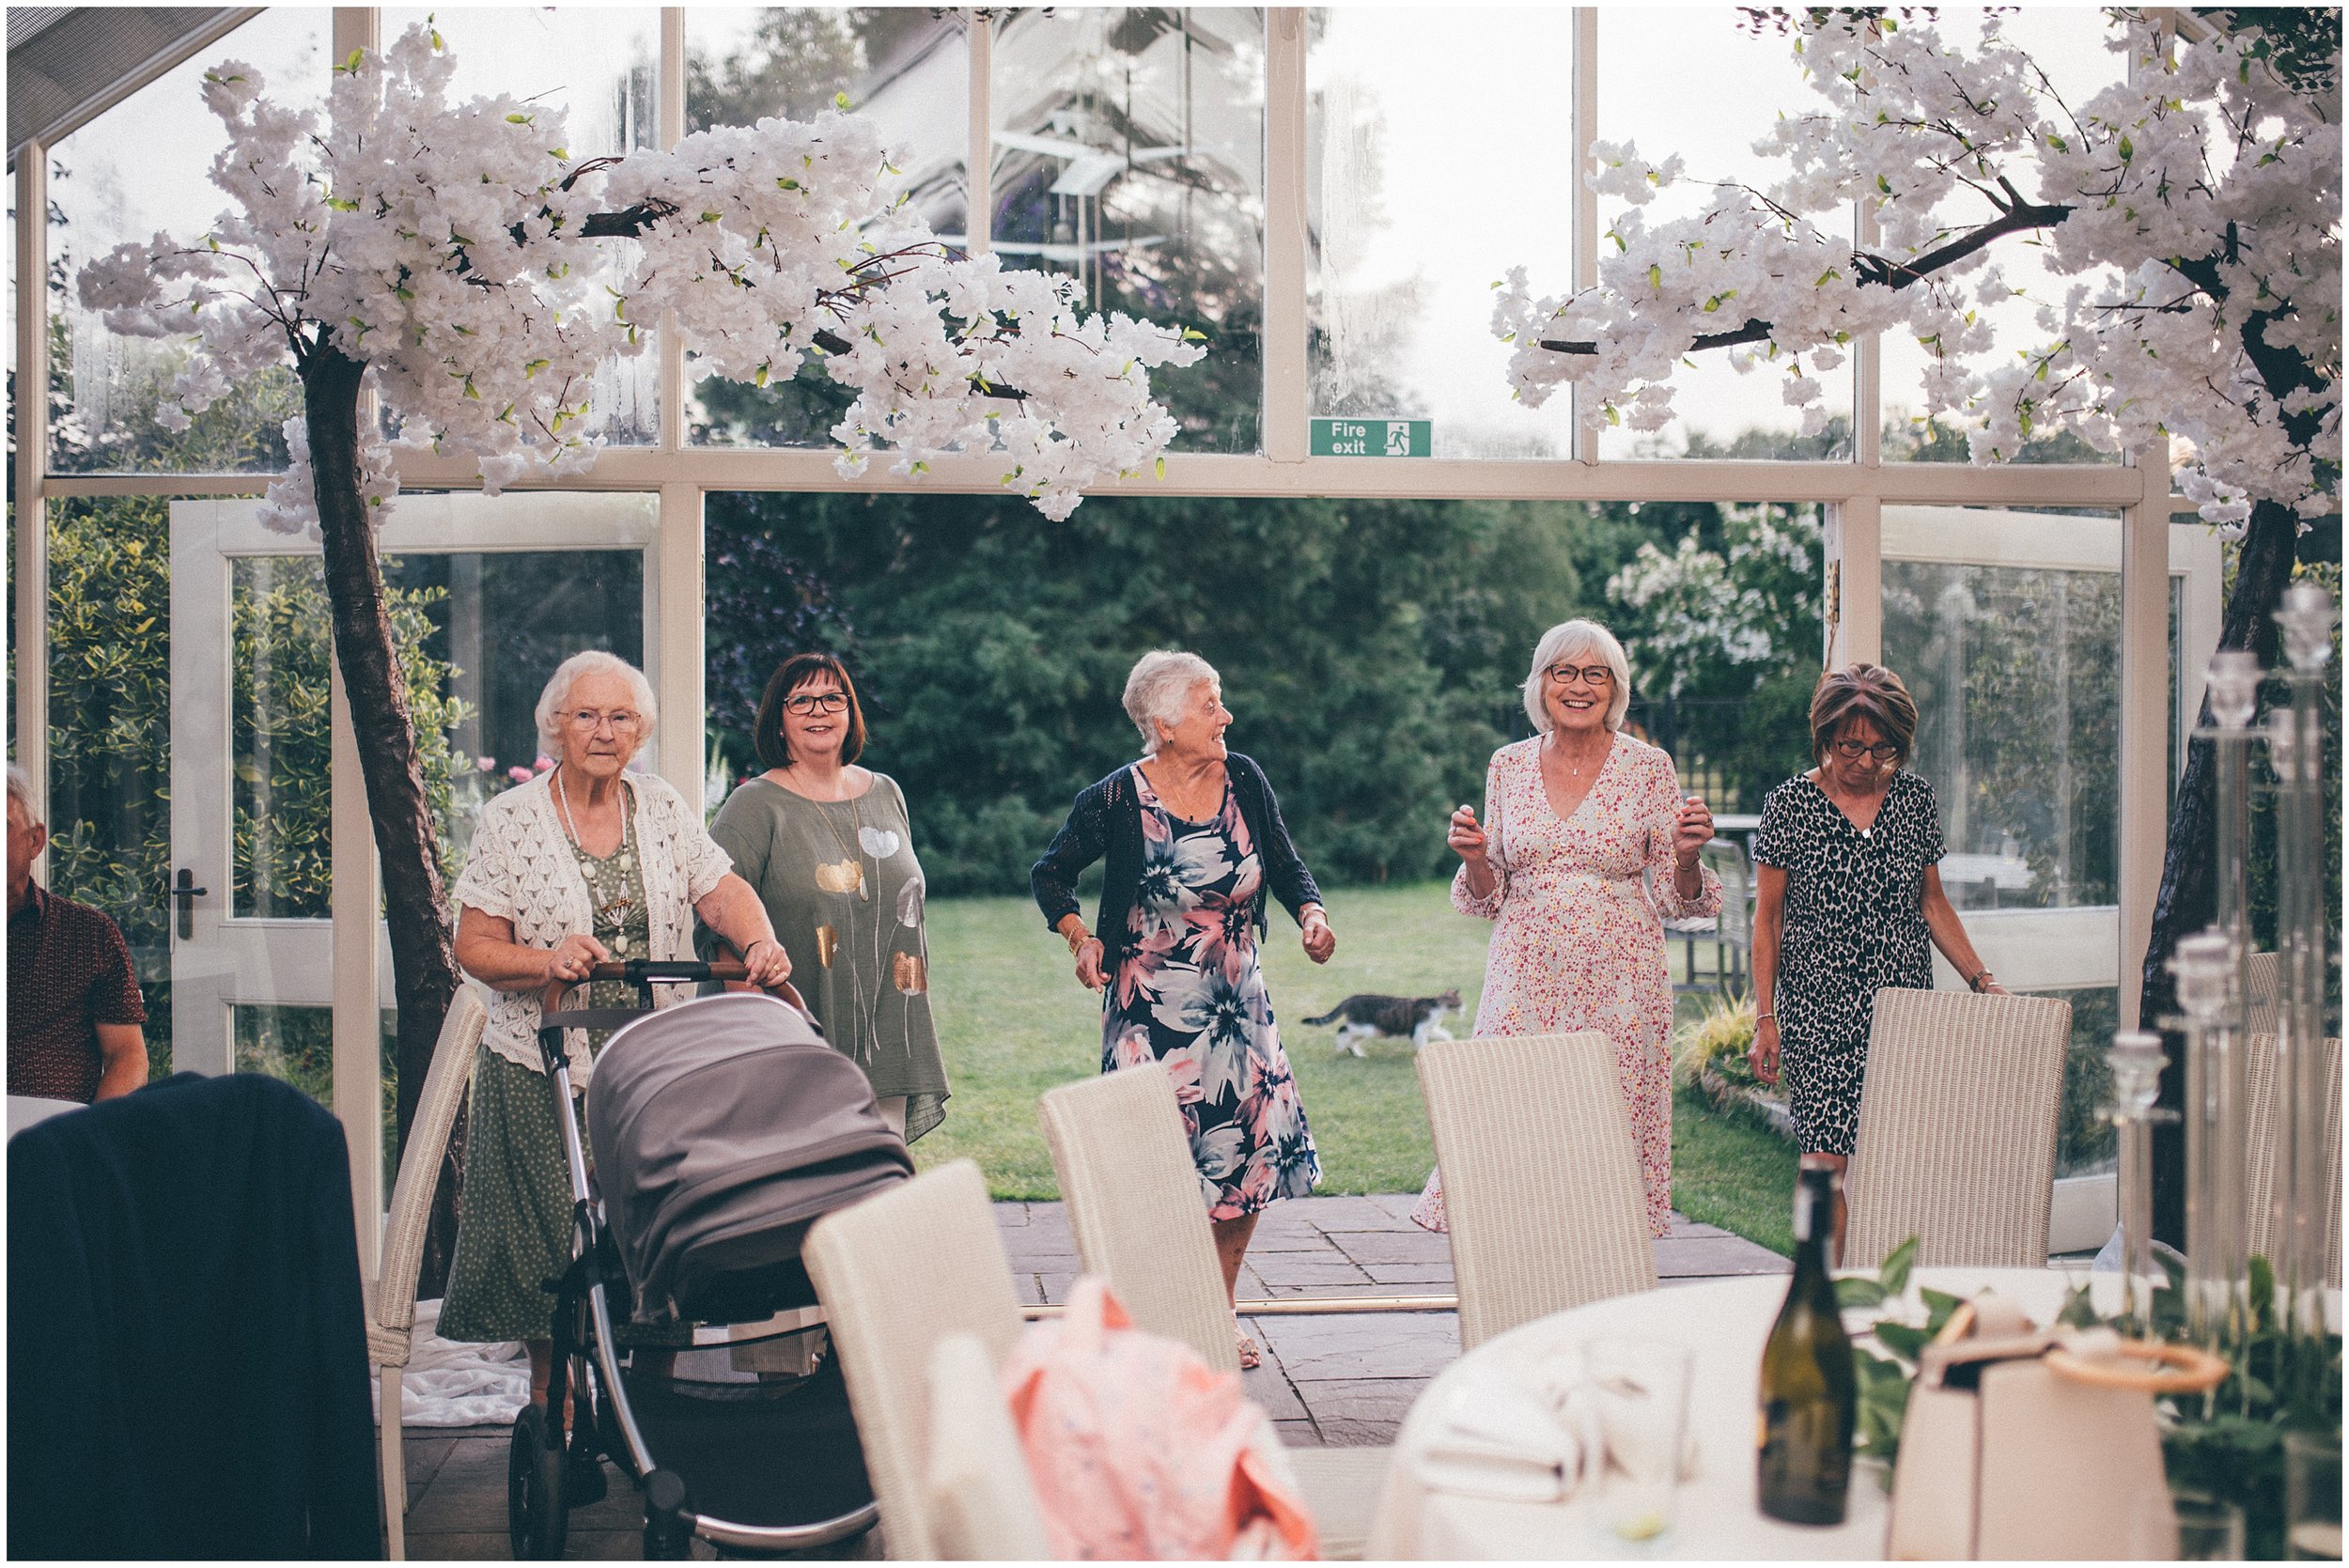 Wedding Guests enjoy the dancefloor at Abbeywood Estate wedding venue in Delamere, Cheshire.